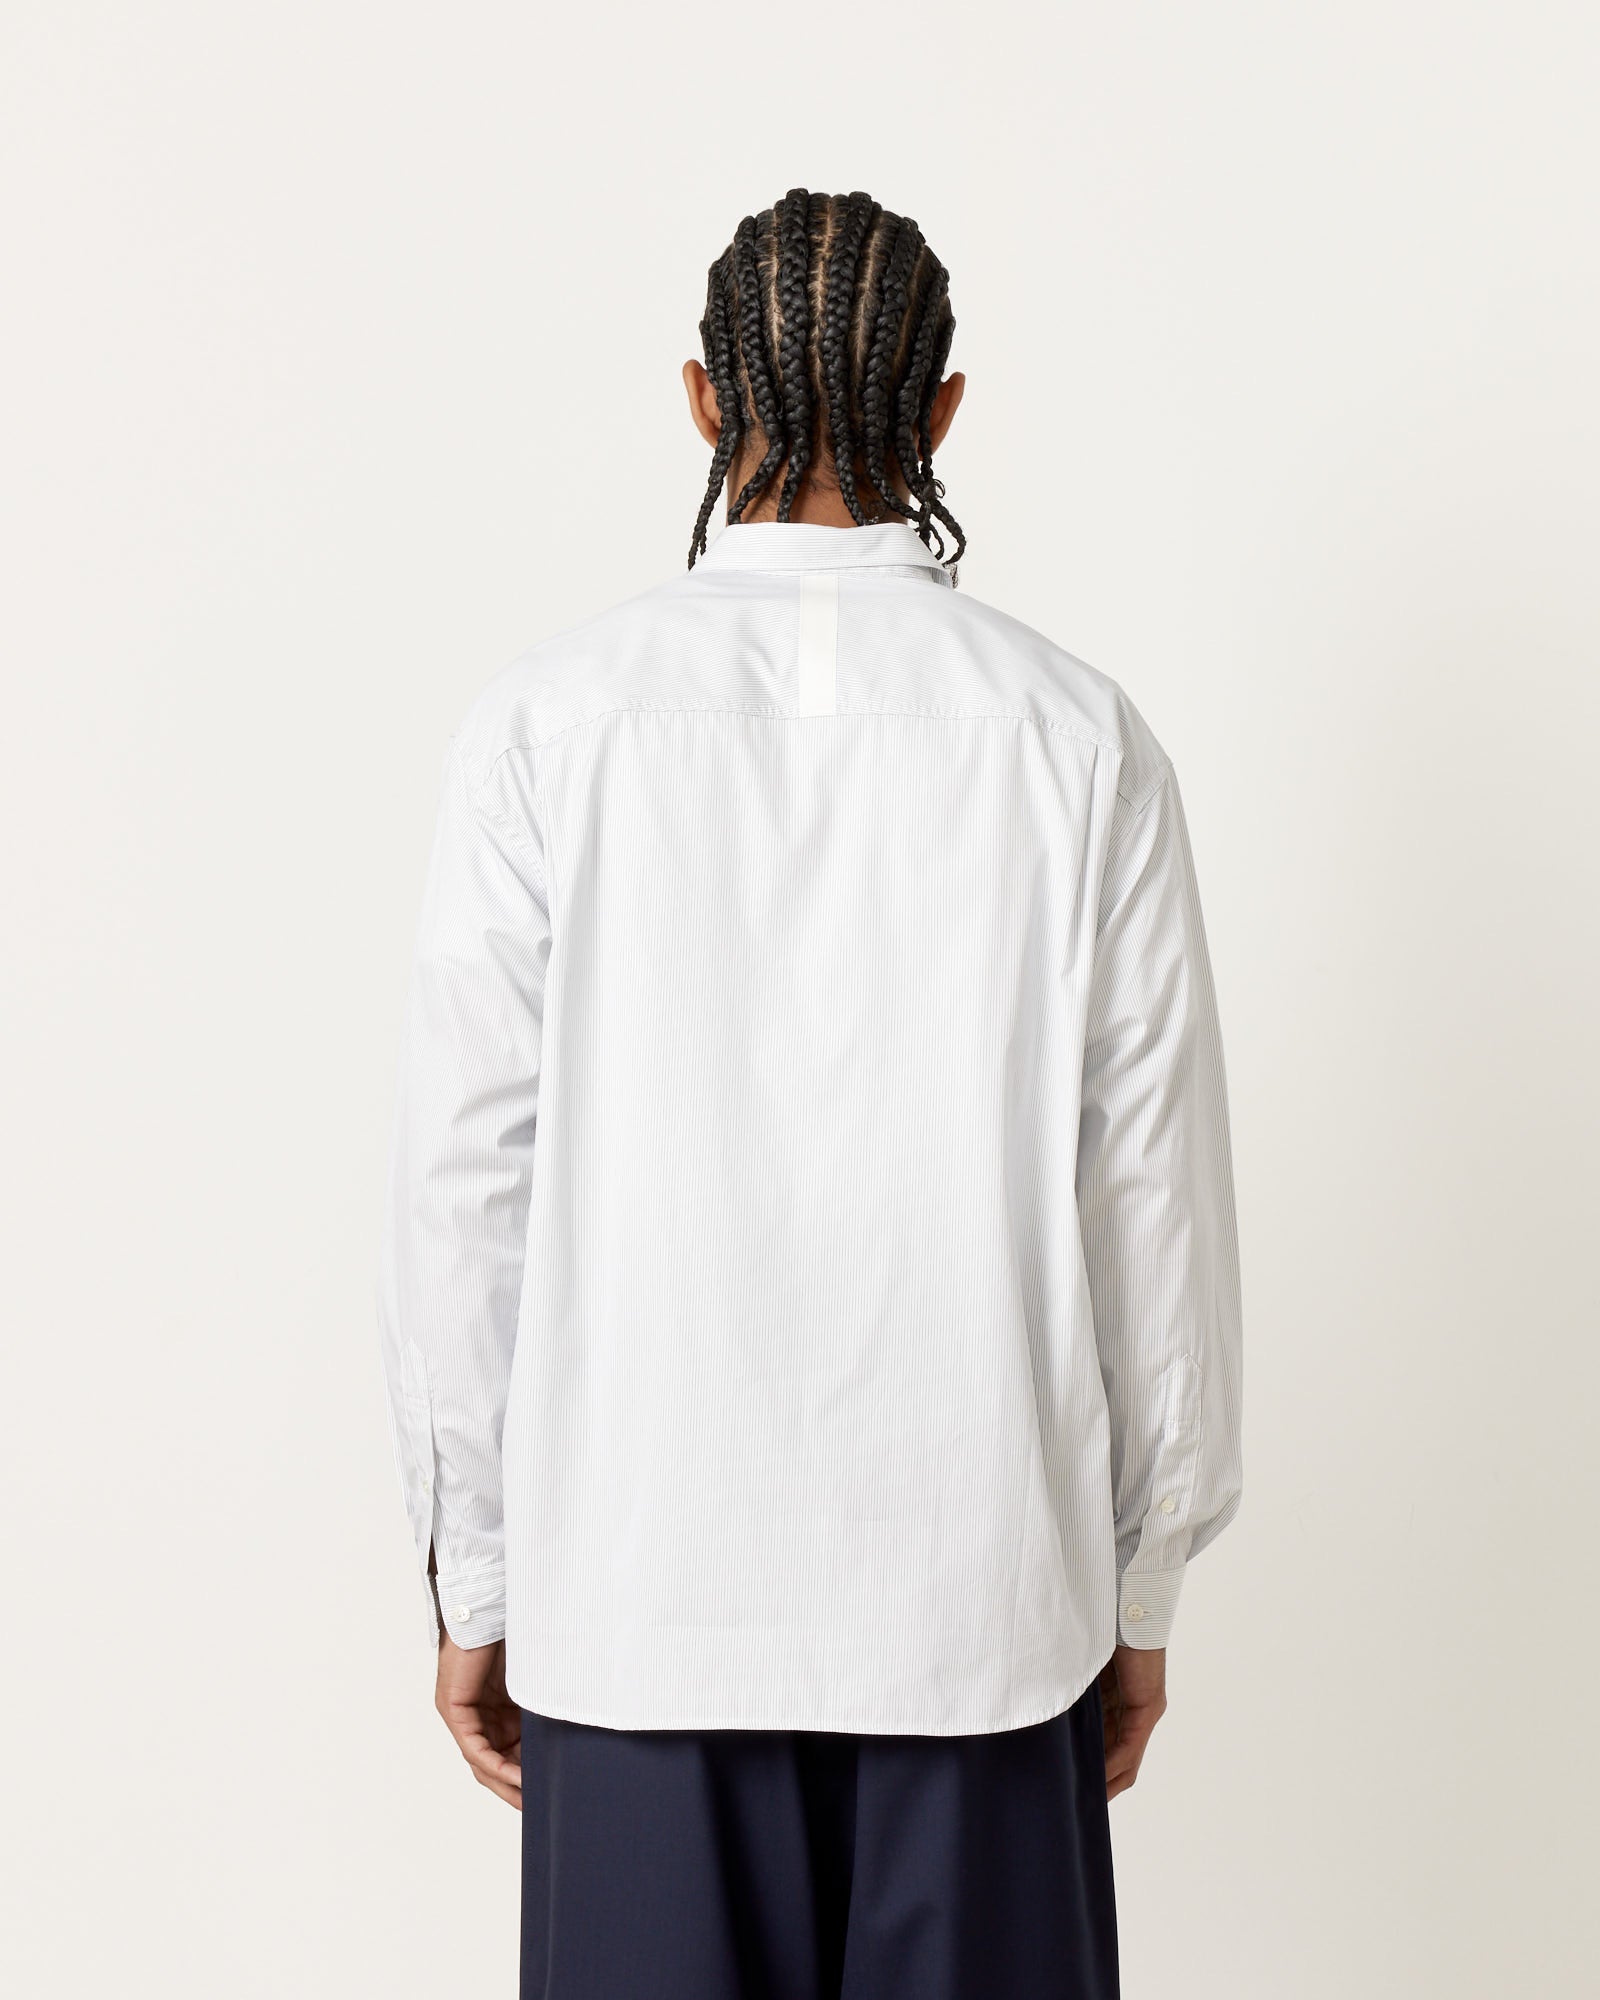 Shirt in White/Navy Stripe